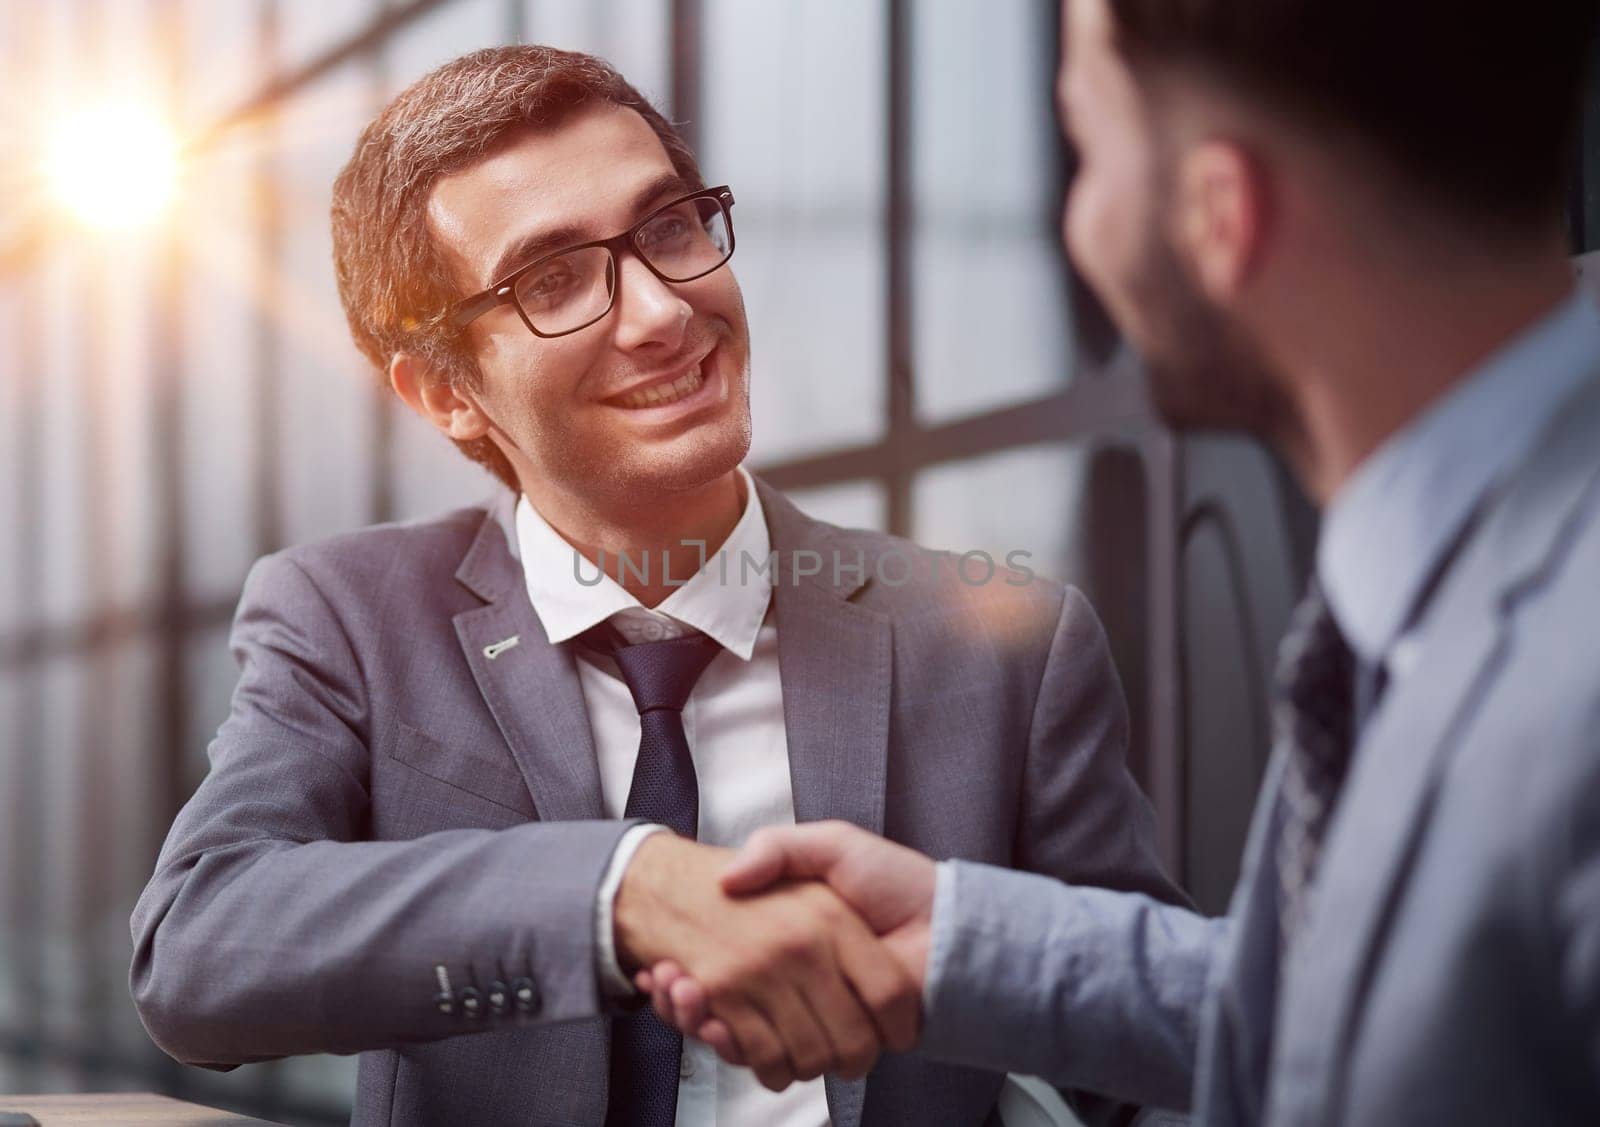 Man having a business meeting, recruitment or agreement.